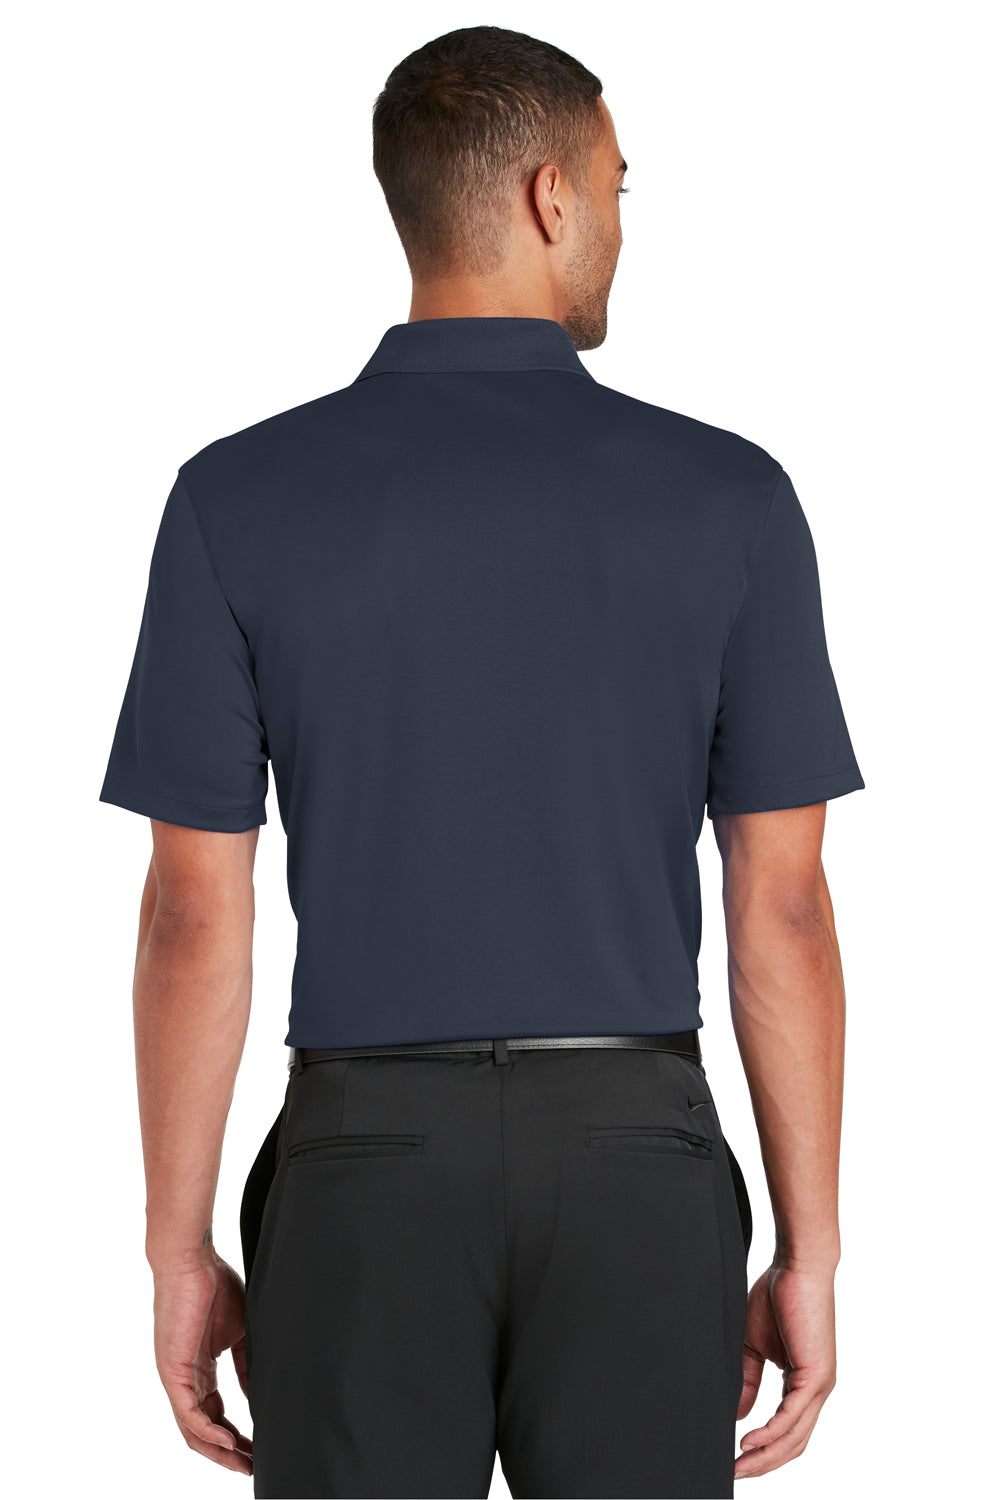 Nike 838956 Mens Players Dri-Fit Moisture Wicking Short Sleeve Polo Shirt Navy Blue Model Back